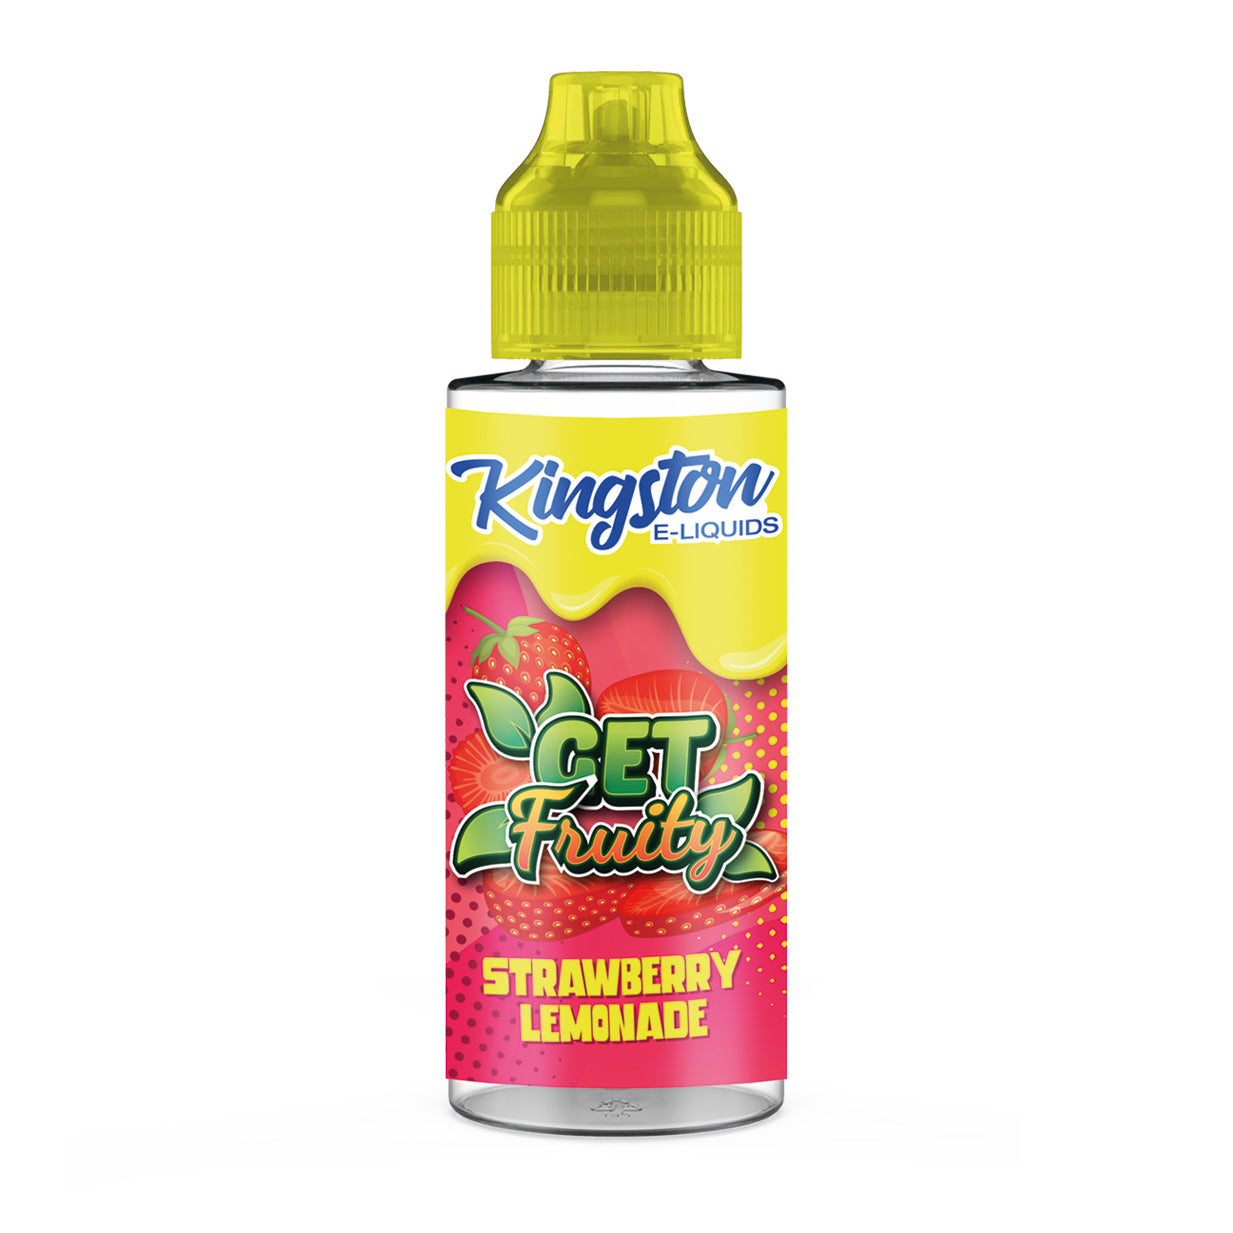 Kingston-Get-Fruity-Strawberry-Lemonade-kingston-e-liquids-100ml-vape-juice-e-juice-eliquidsoutlet-shortfill